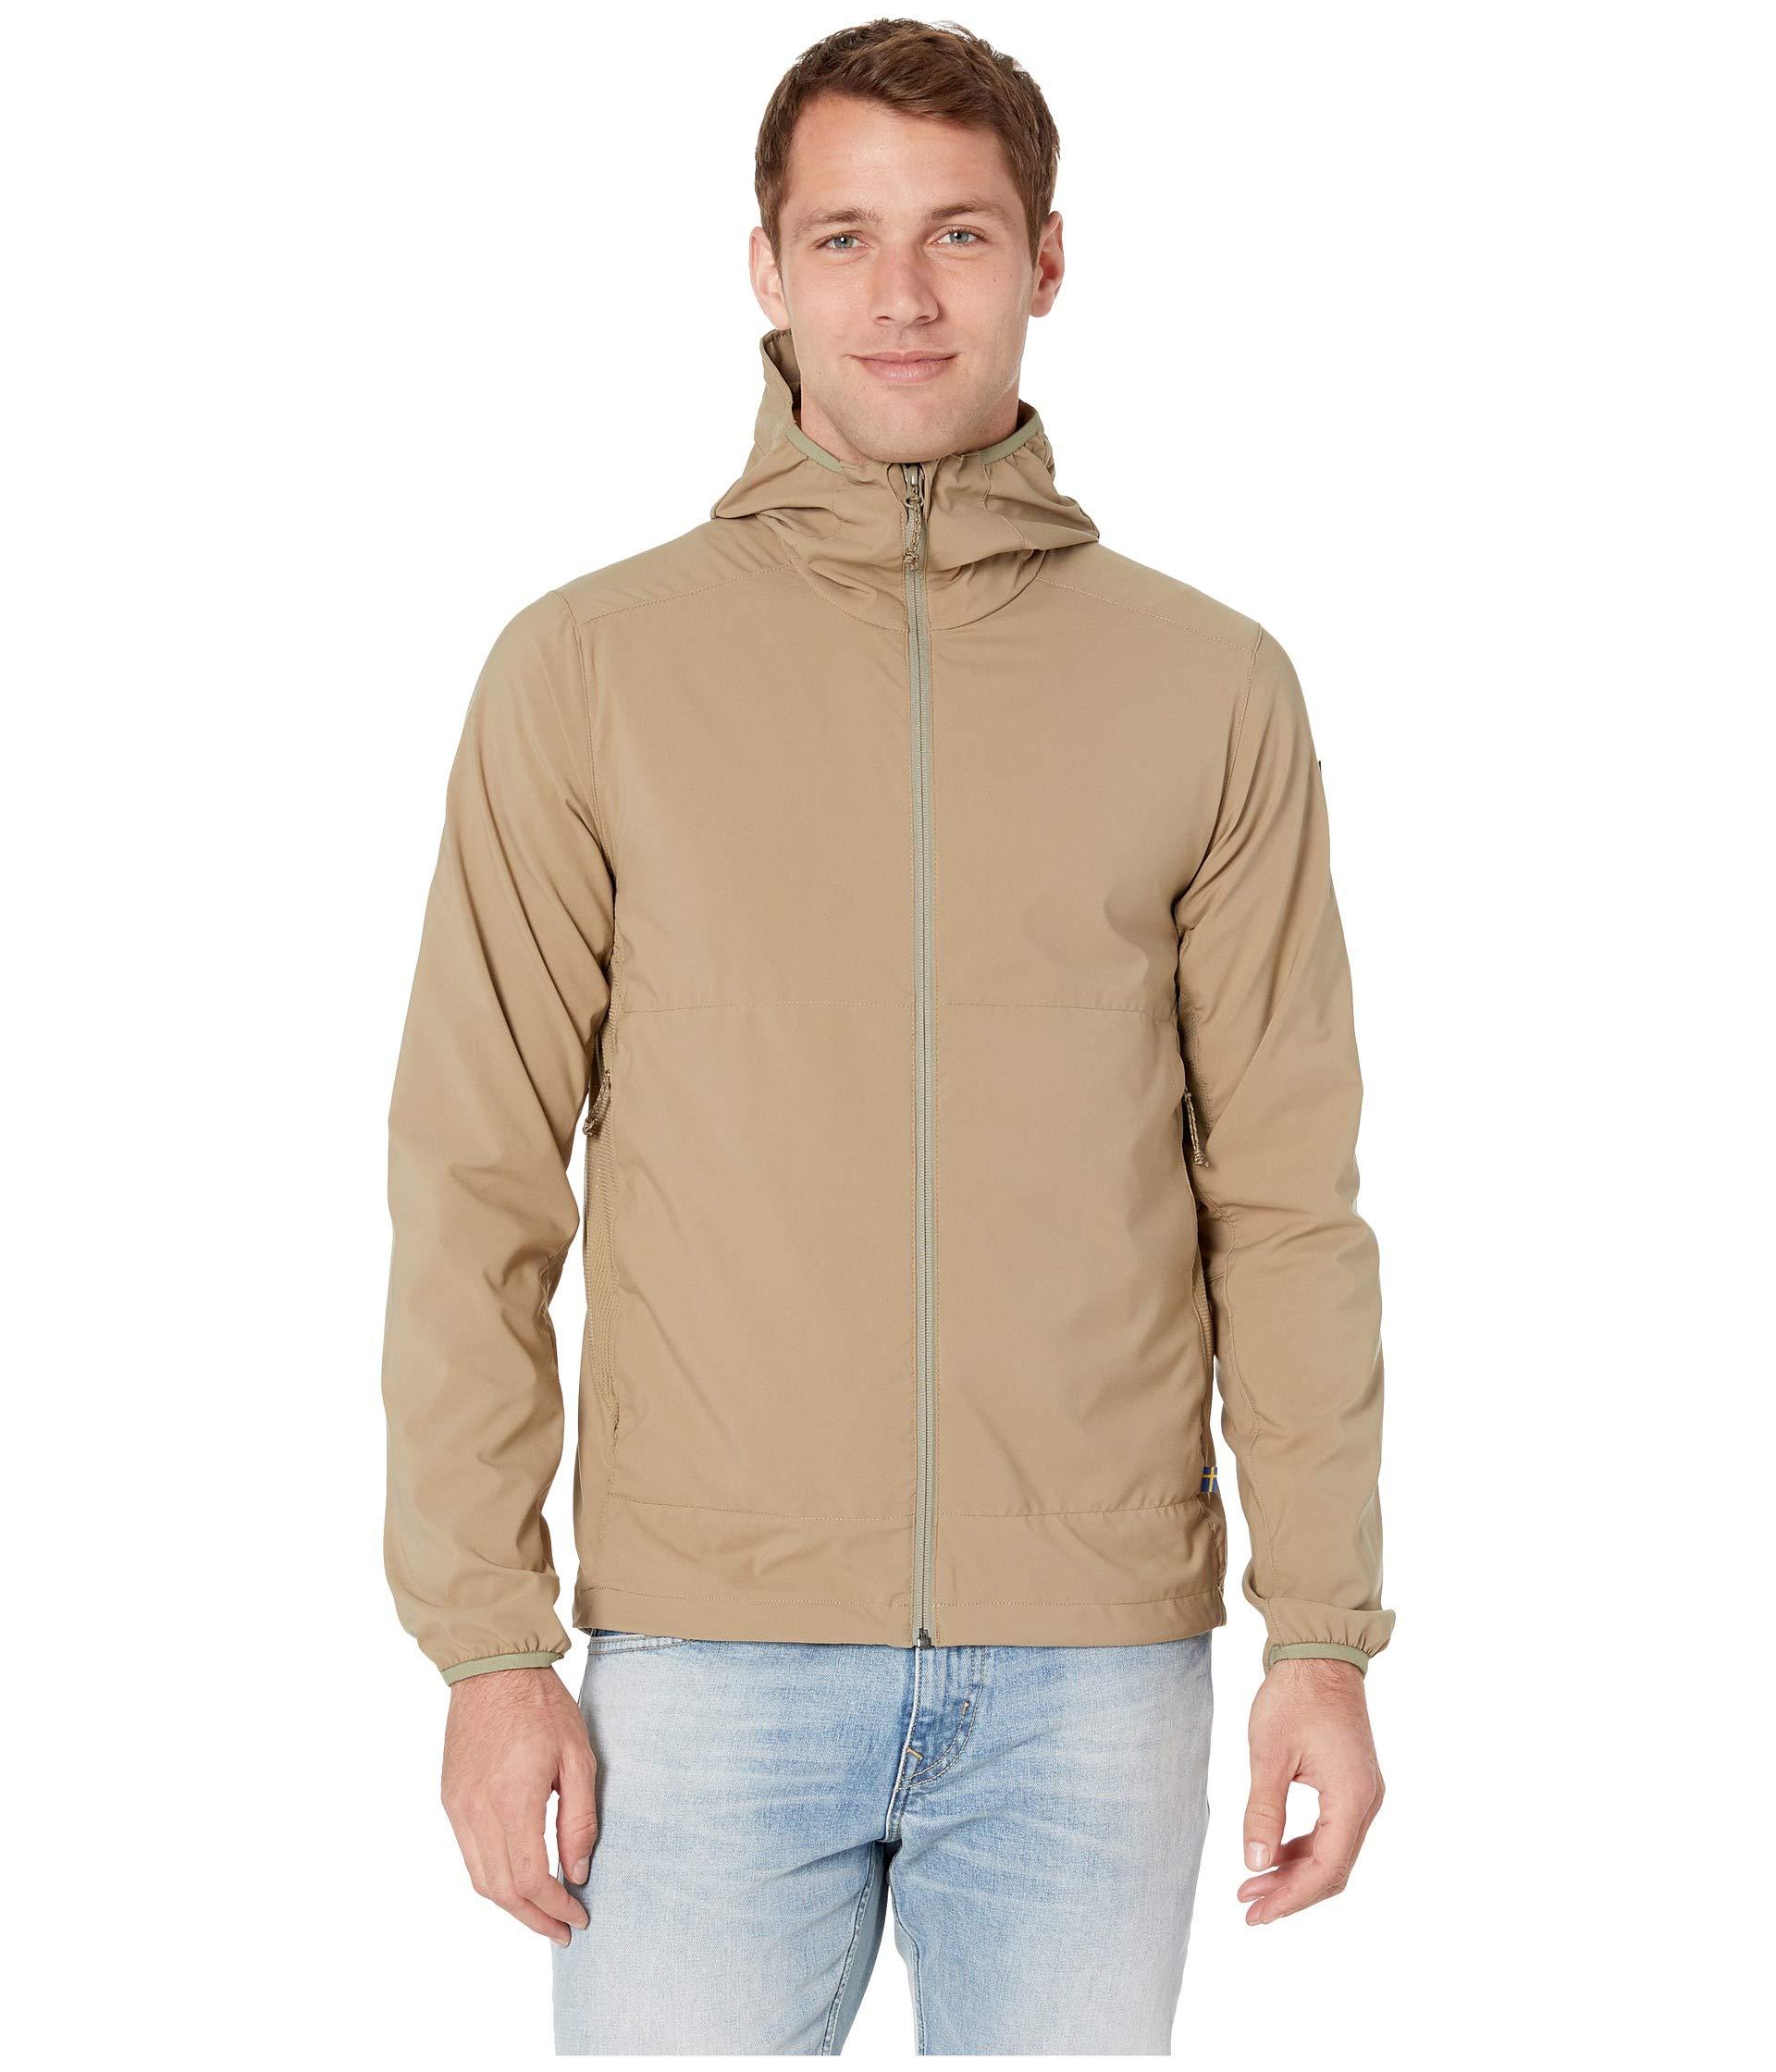 Fjallraven Synthetic Abisko Hybrid Breeze Jacket in Brown for Men - Lyst